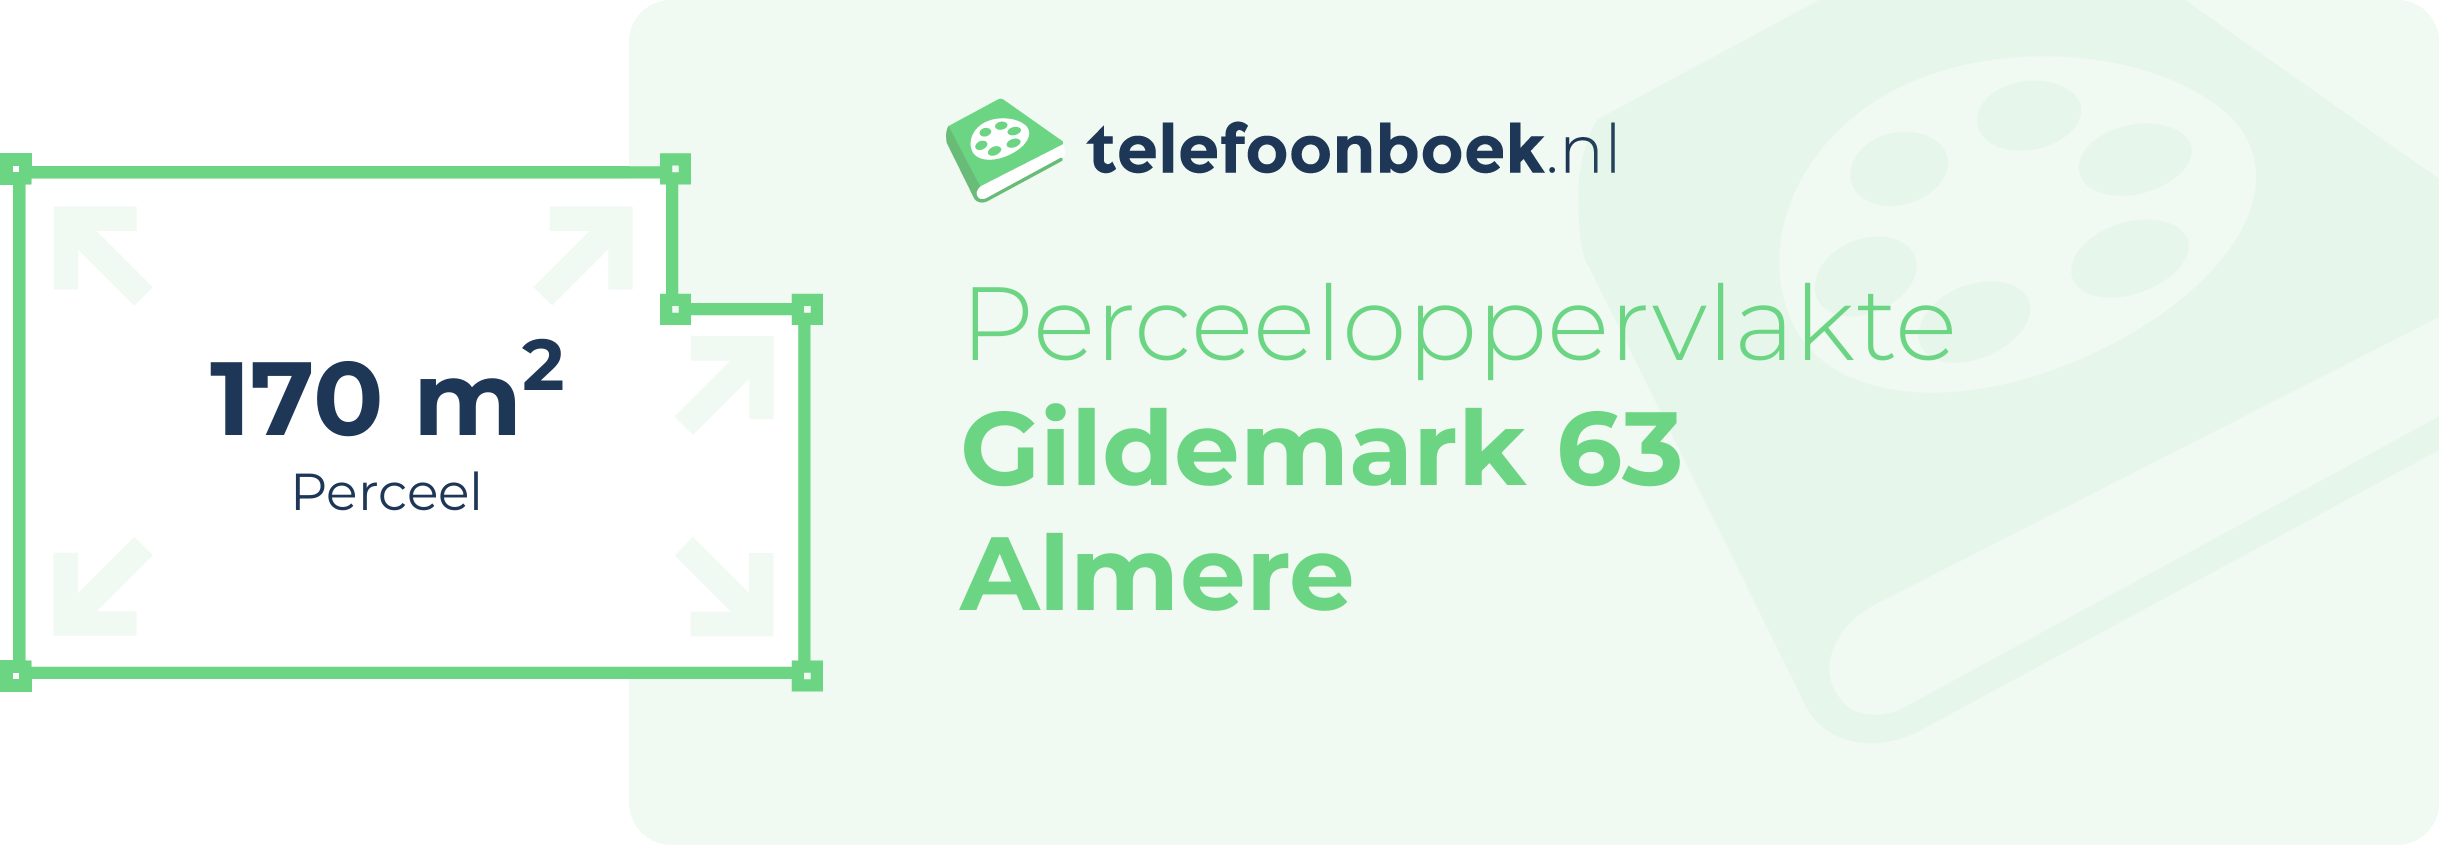 Perceeloppervlakte Gildemark 63 Almere